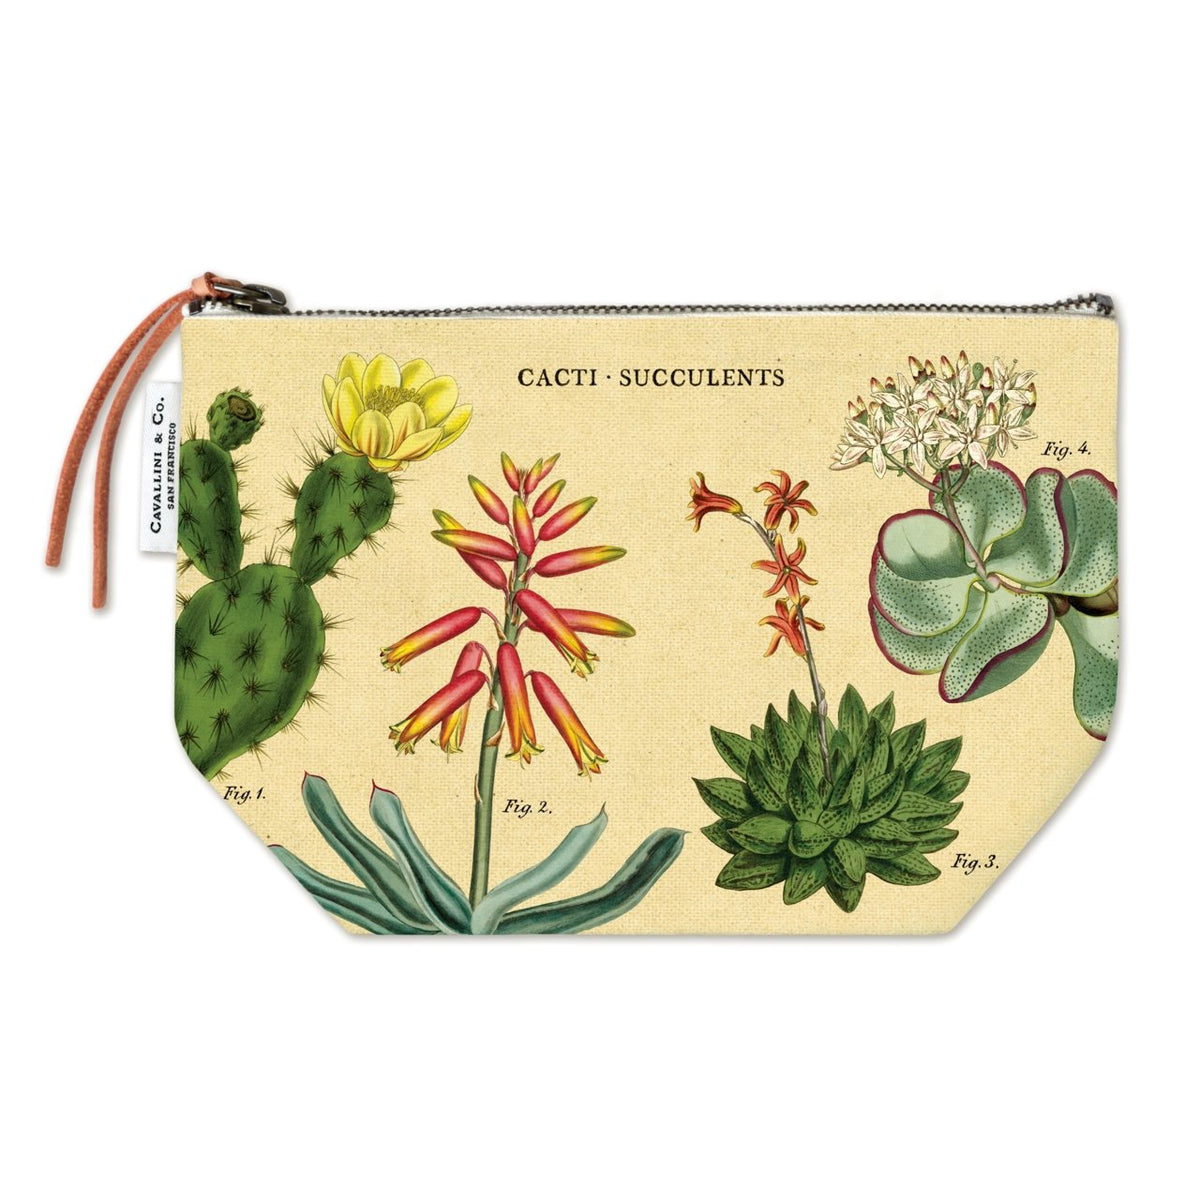 Cavallini Vintage Inspired Pouch - Cacti & Succulents - merriartist.com